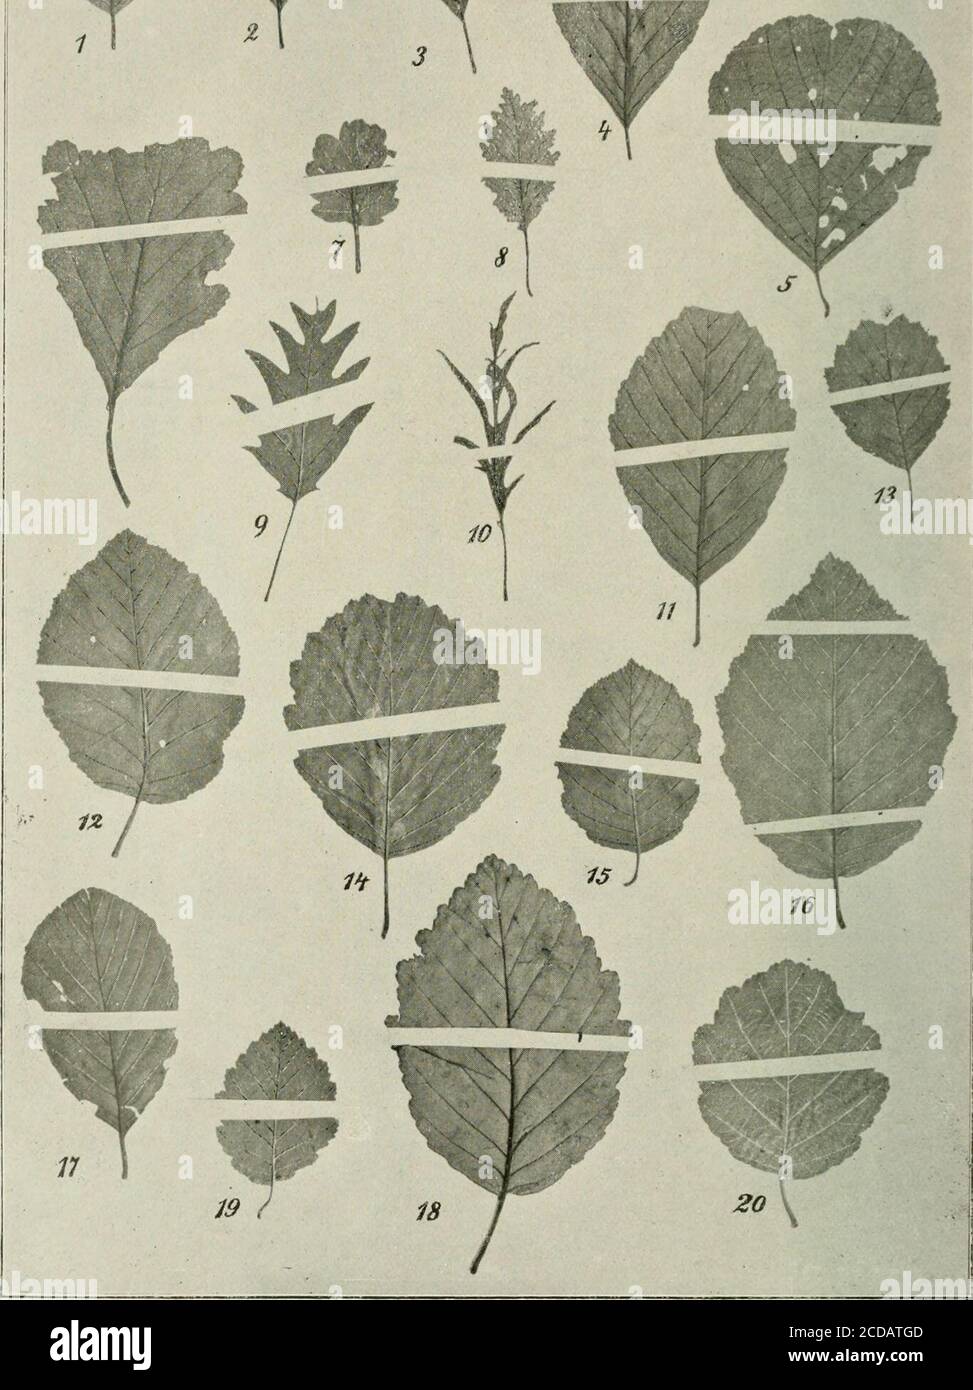 . Mitteilungen der Deutschen Dendrologischen Gesellschaft . Blattei : i. Alnus rhombifolia var. ovalis. — 2. A. oblongifolia. — 3- A. senulata var. genuina. —4. A. serrulatoides. — S- A. Fauriei — 6. A. glutinosa var. vulgaris forma quercifolia. — 7 A.glutinosa var. vulgaris forma incisa. — 8. A. glutinosa var. vulgaris forma sorbifolia. — 9. A. gluti-nosa var. vulgarisfjforma laciniata. — 10. A. glutinosa var. vulgaris forma imperialis. — 11. A. gluti-nosa var. denticulata. — 12. A. glutinosa x rugosa (A. silesiaca). — 13. A. glutinosa x incana(A. hibrida) var. pubescens. — 14. A. glutinosa x Stock Photo